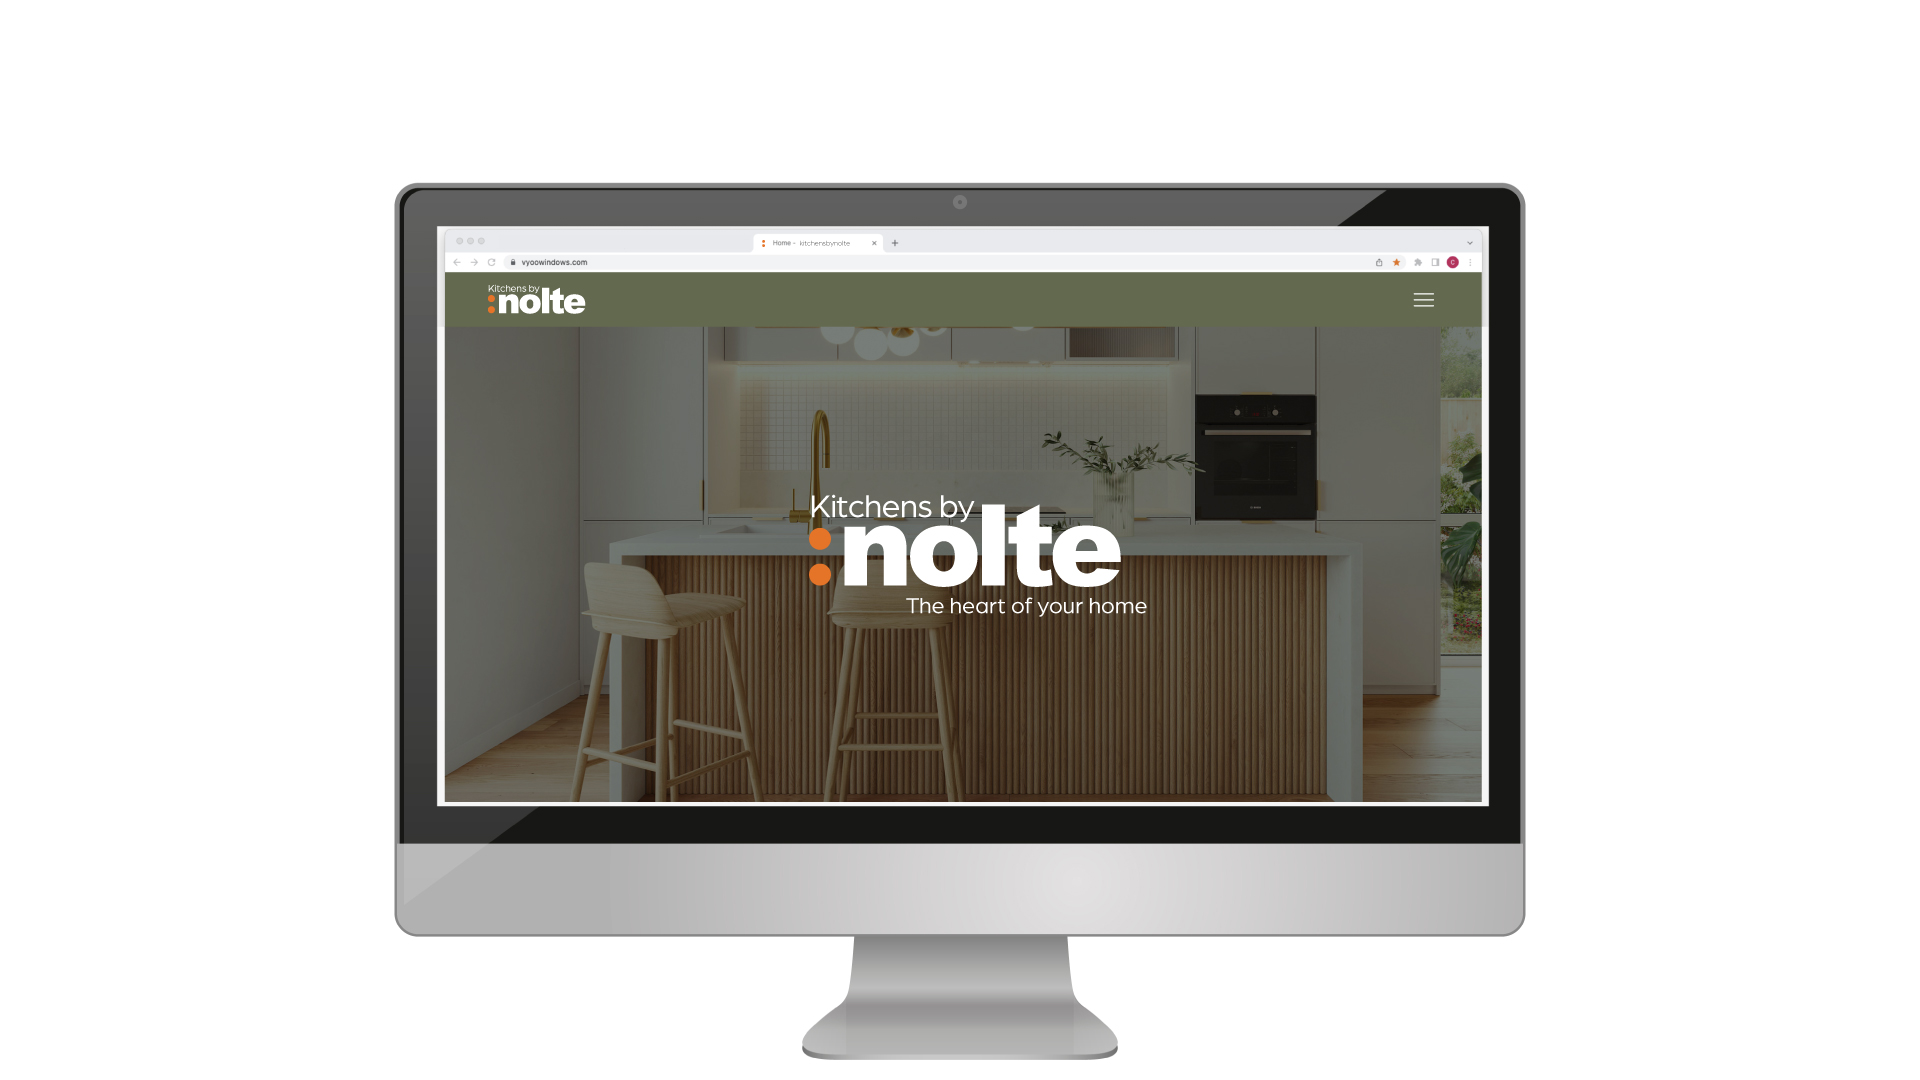 Kitchens by Nolte website on a computer mockup designed by Bopgun Design